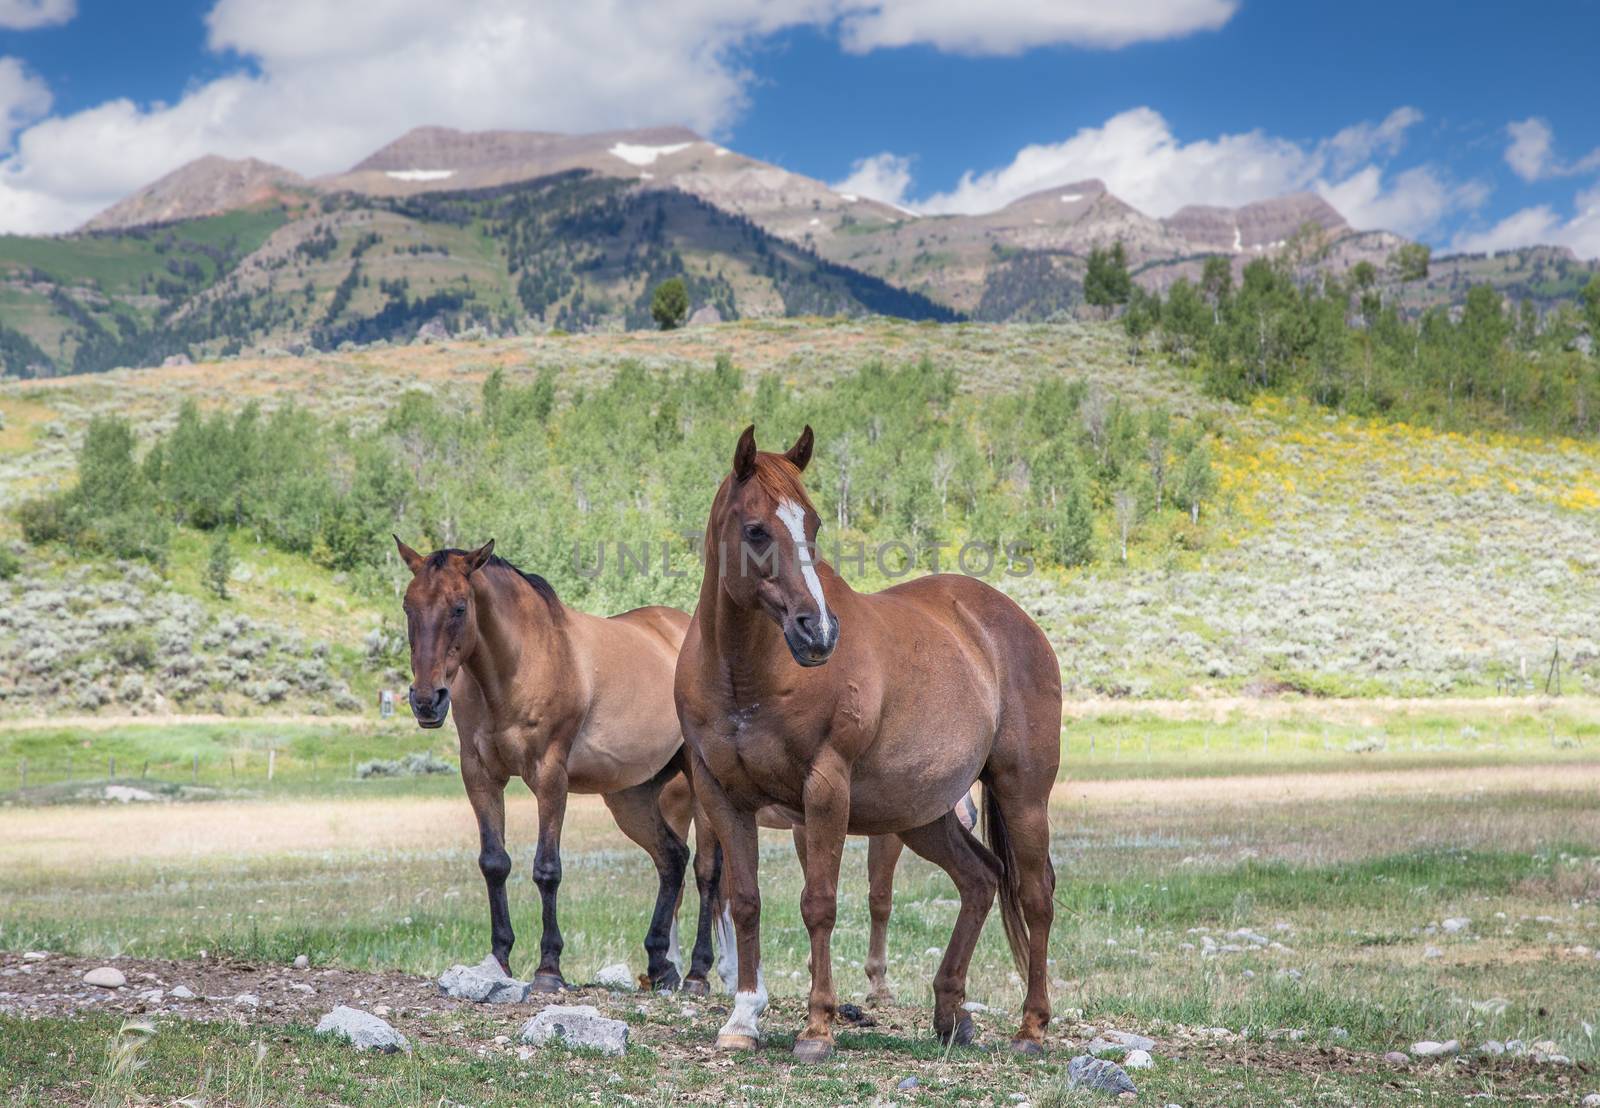 Teton Horses by teacherdad48@yahoo.com